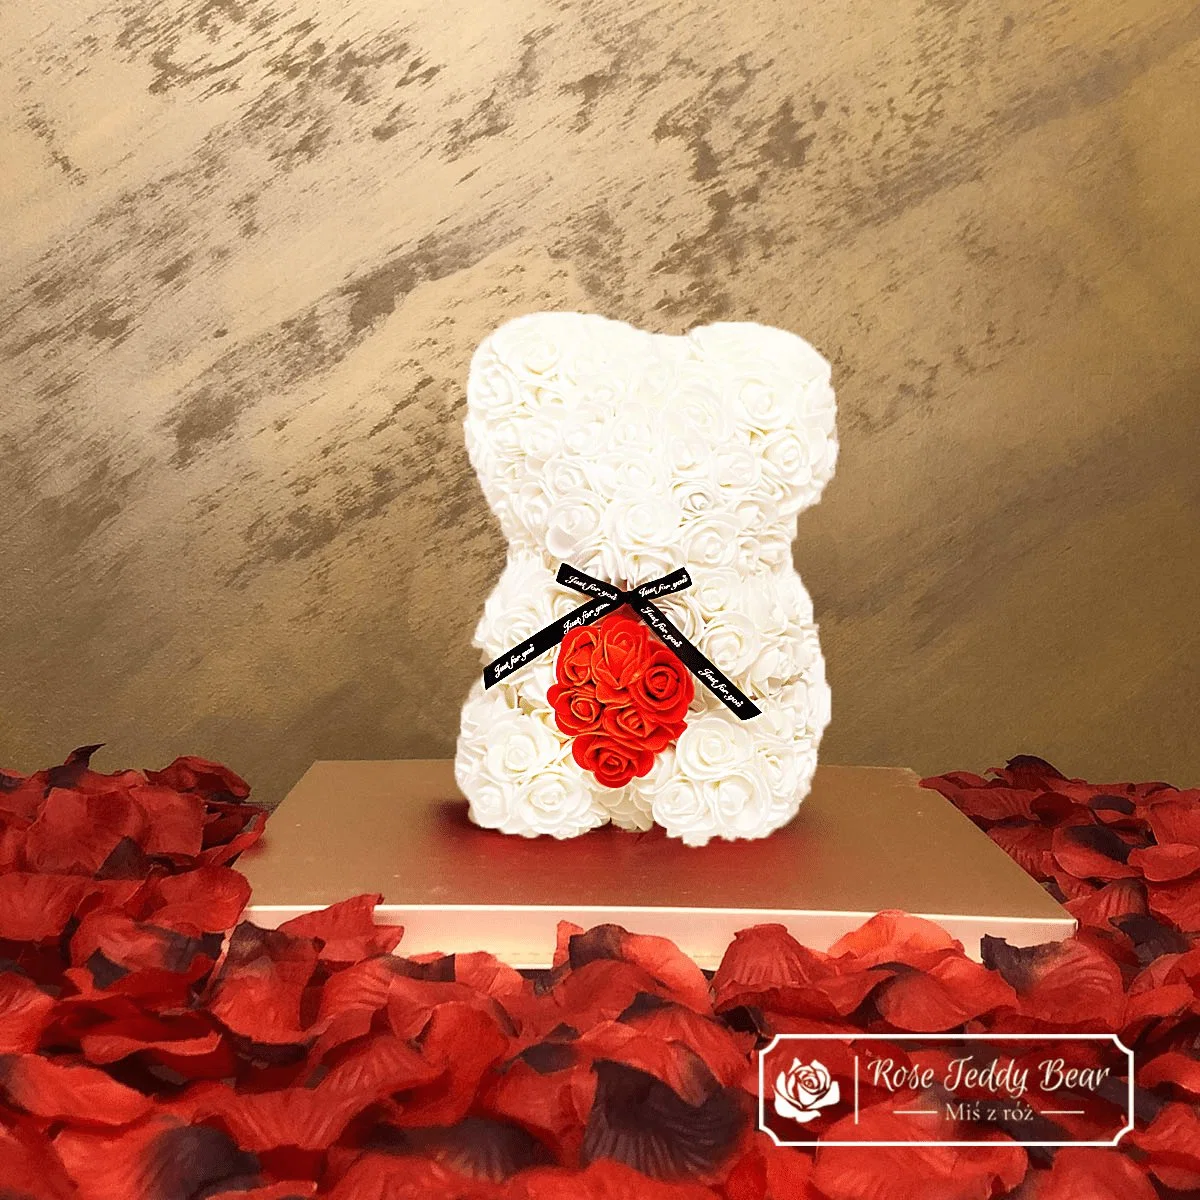 Hot Sale Rose Teddy Bear PE Foam Handmade with Gift Box